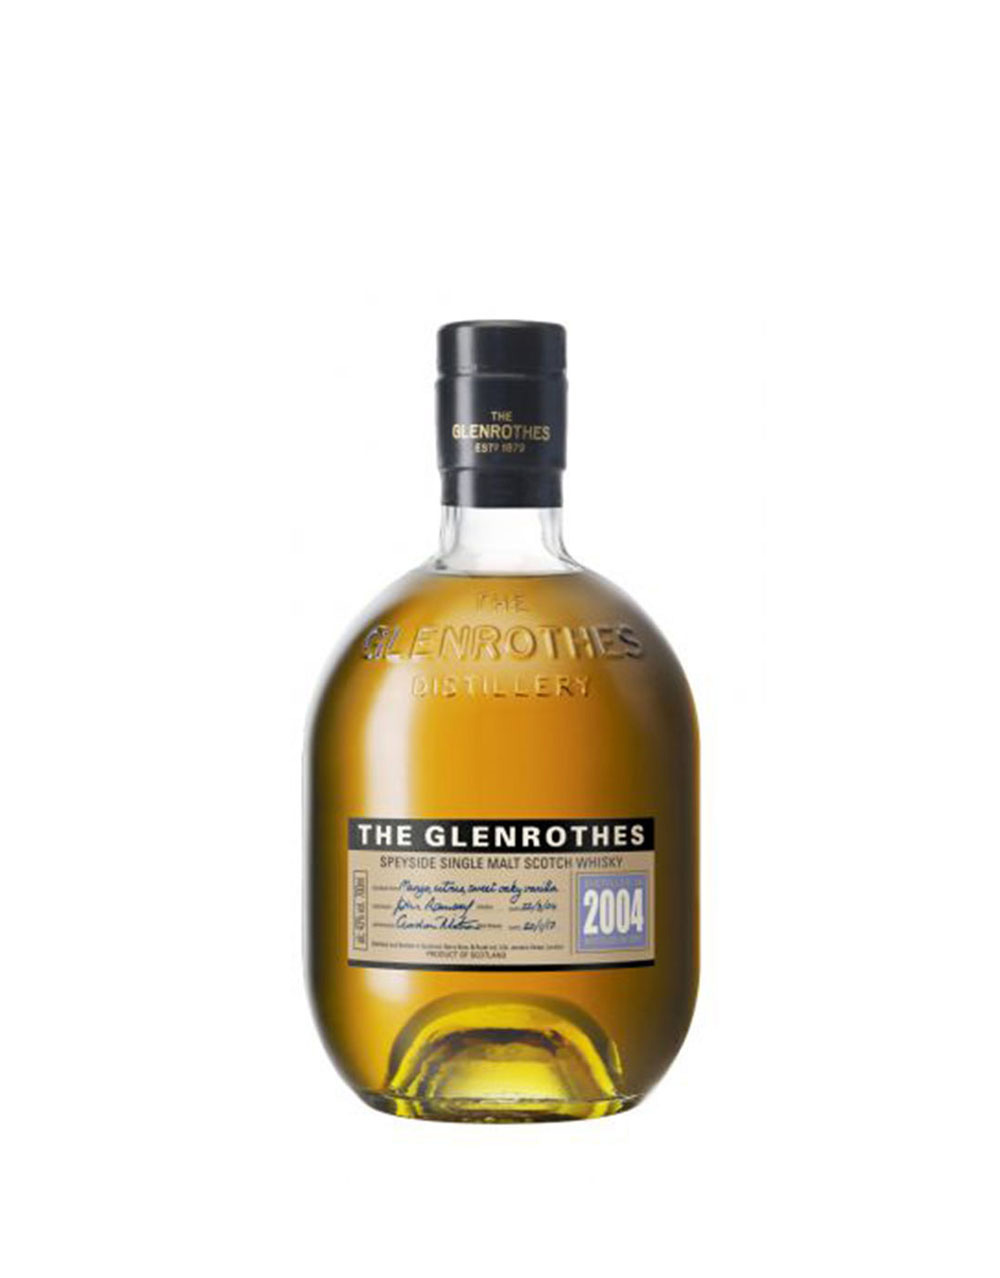 The Glenrothes 2004 Vintage Scotch Whisky